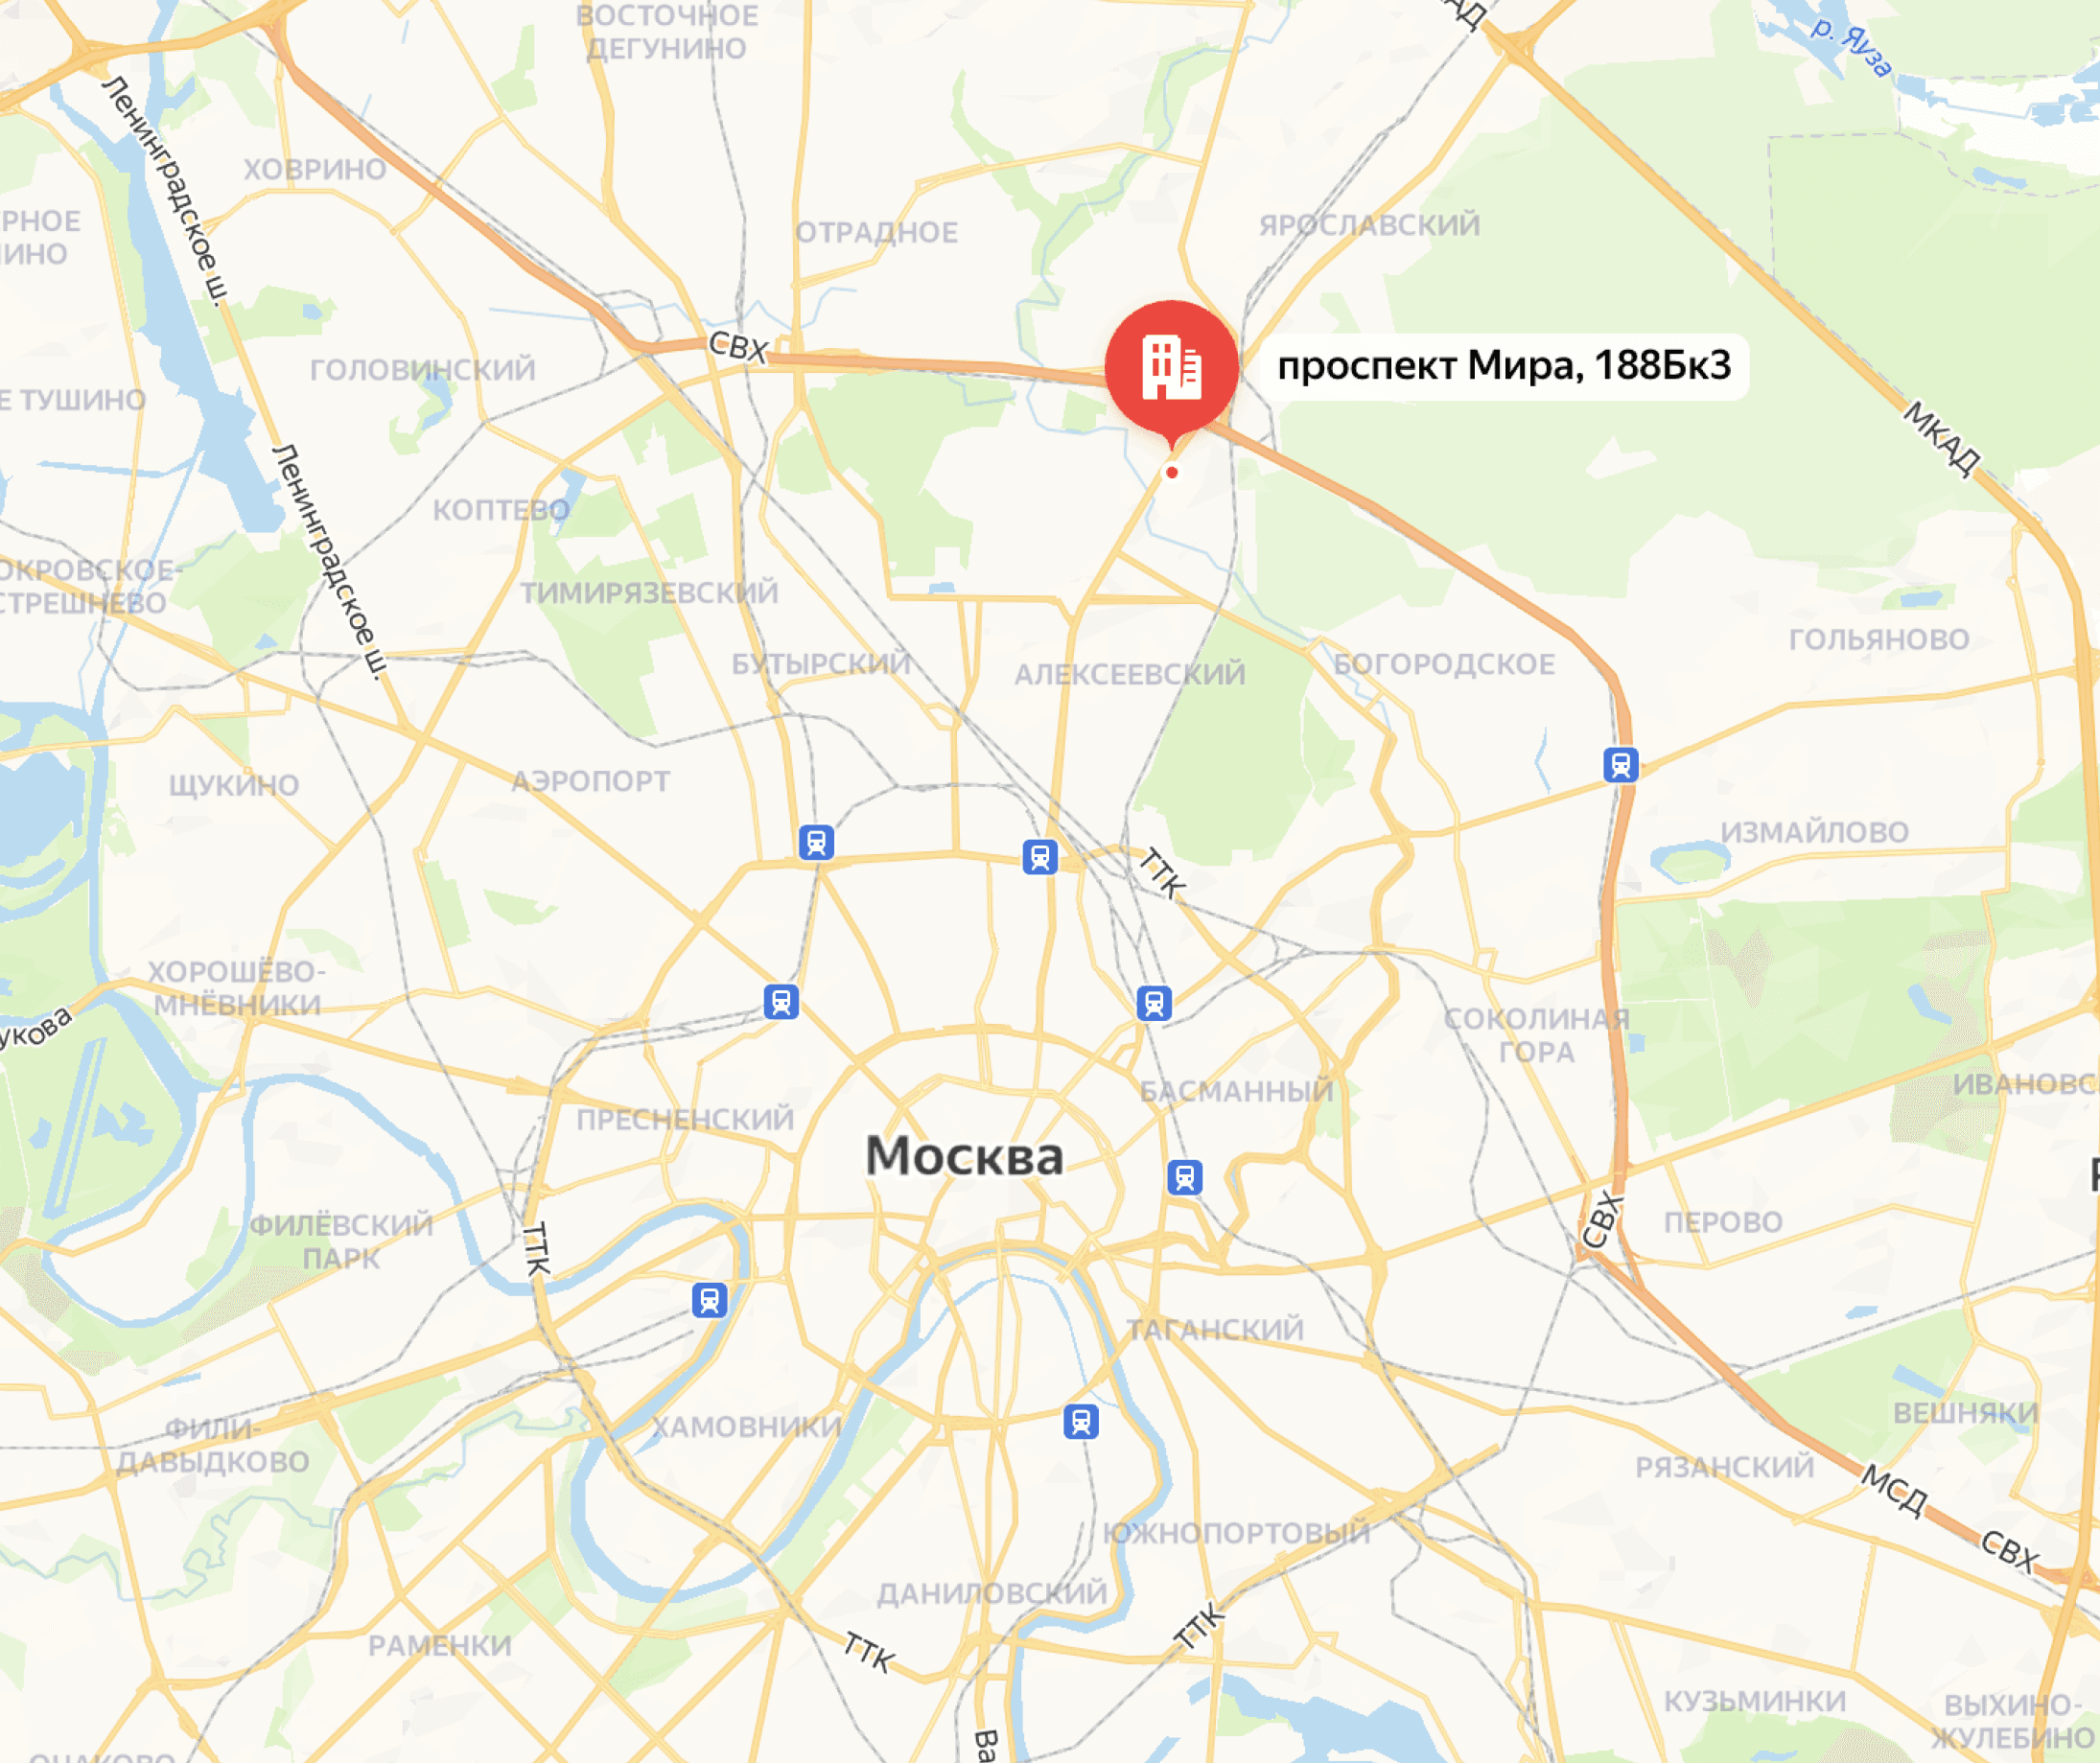 poizon map location